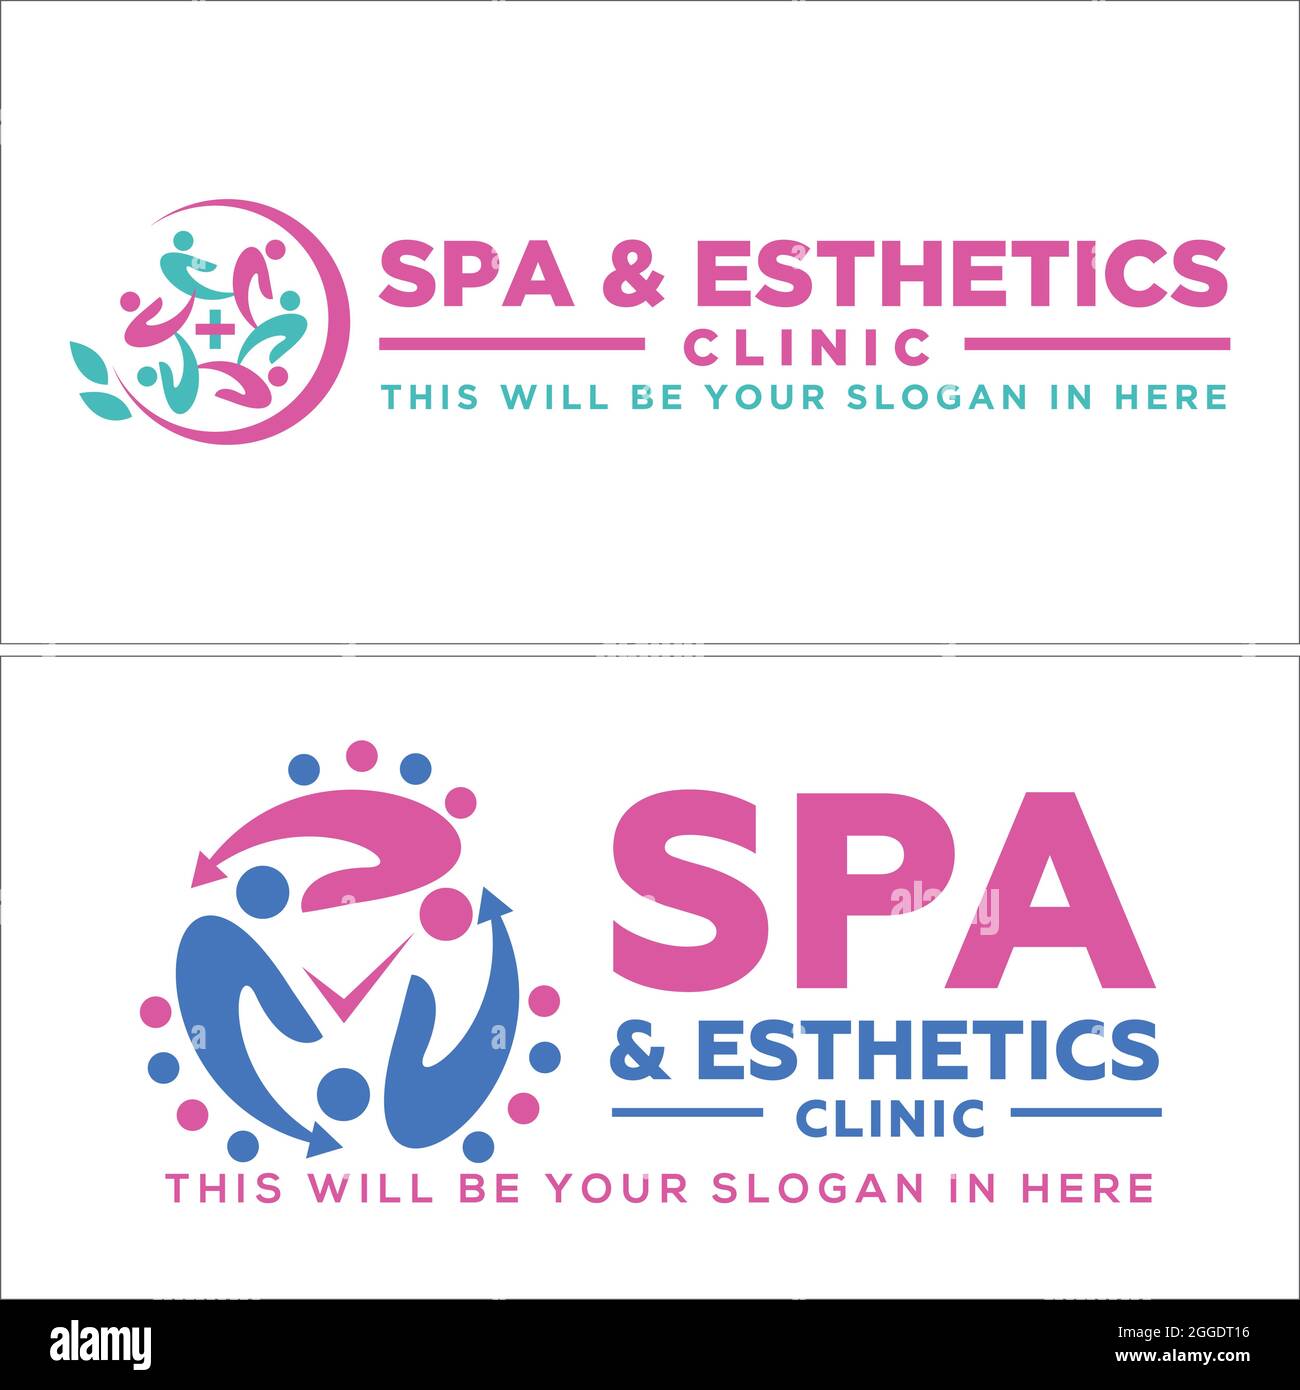 Spa aesthetics clinic with people arrow circling logo design Stock Vector